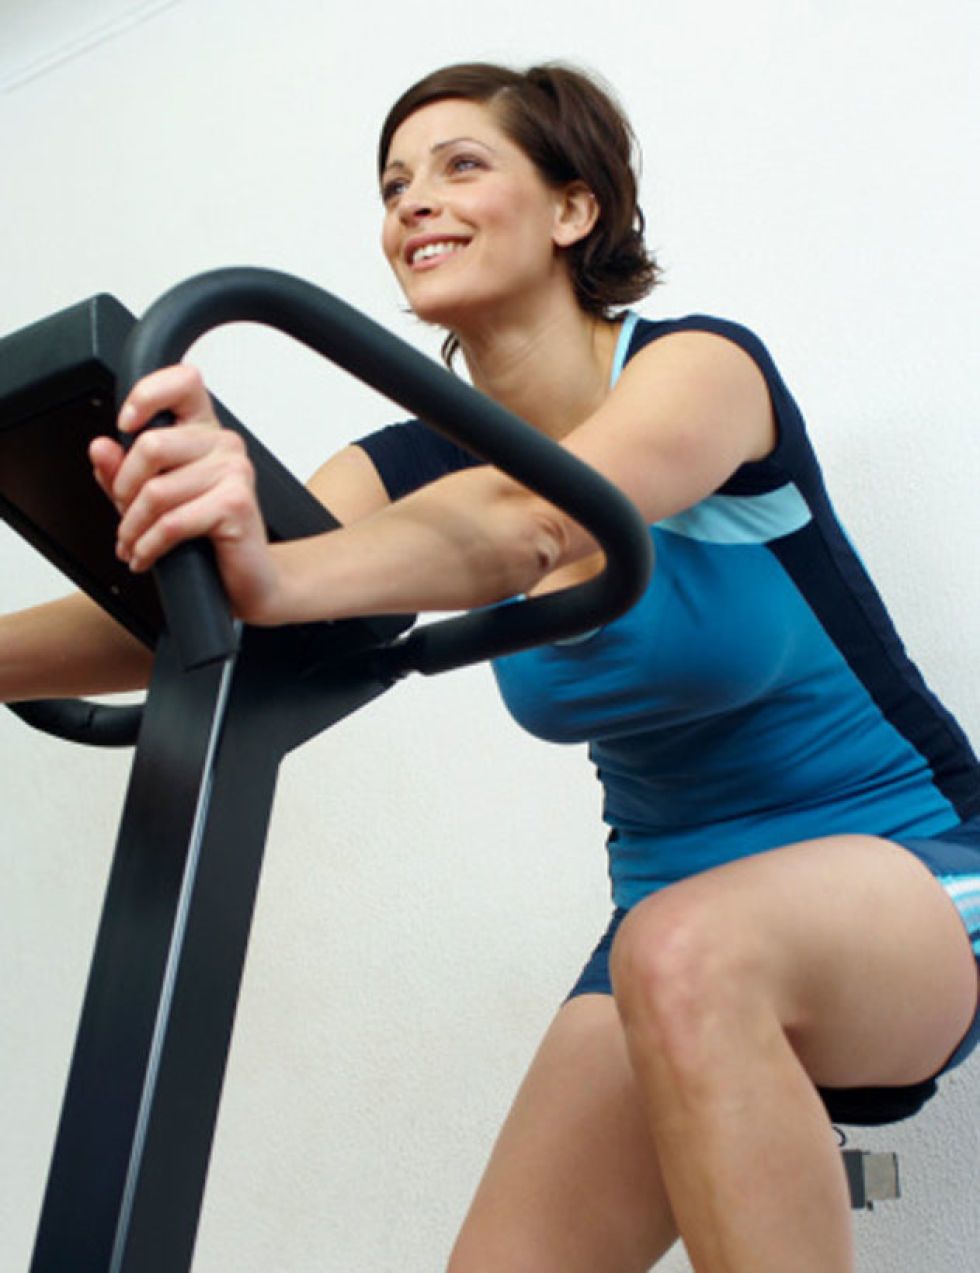 Beneficios del stepper fitness para lograr tu cuerpo ideal